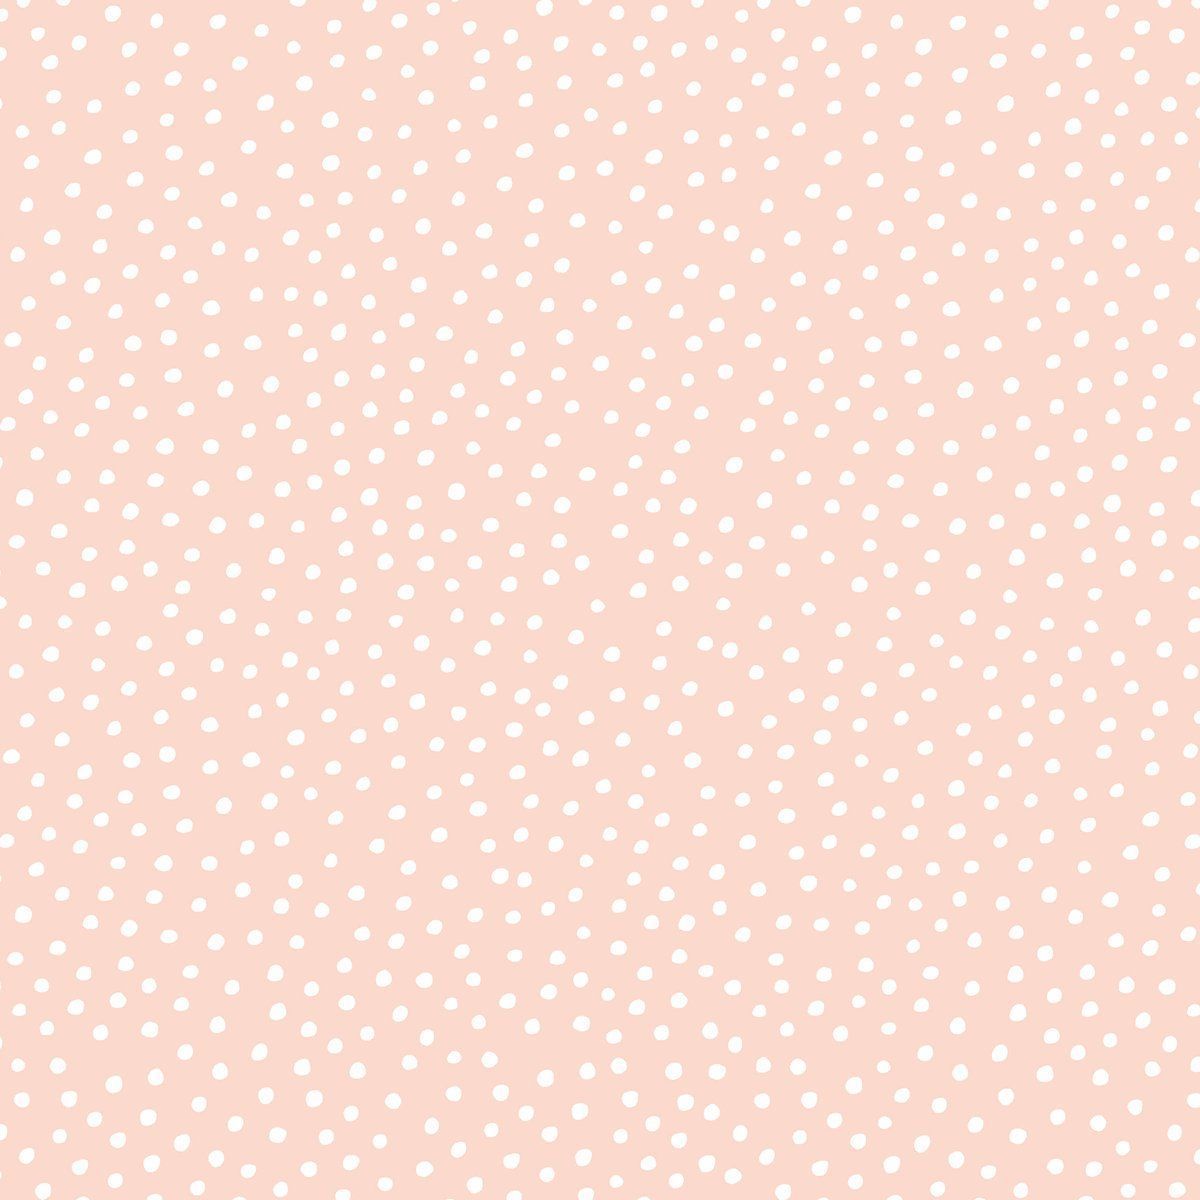 A pink and white polka dot pattern - Pattern